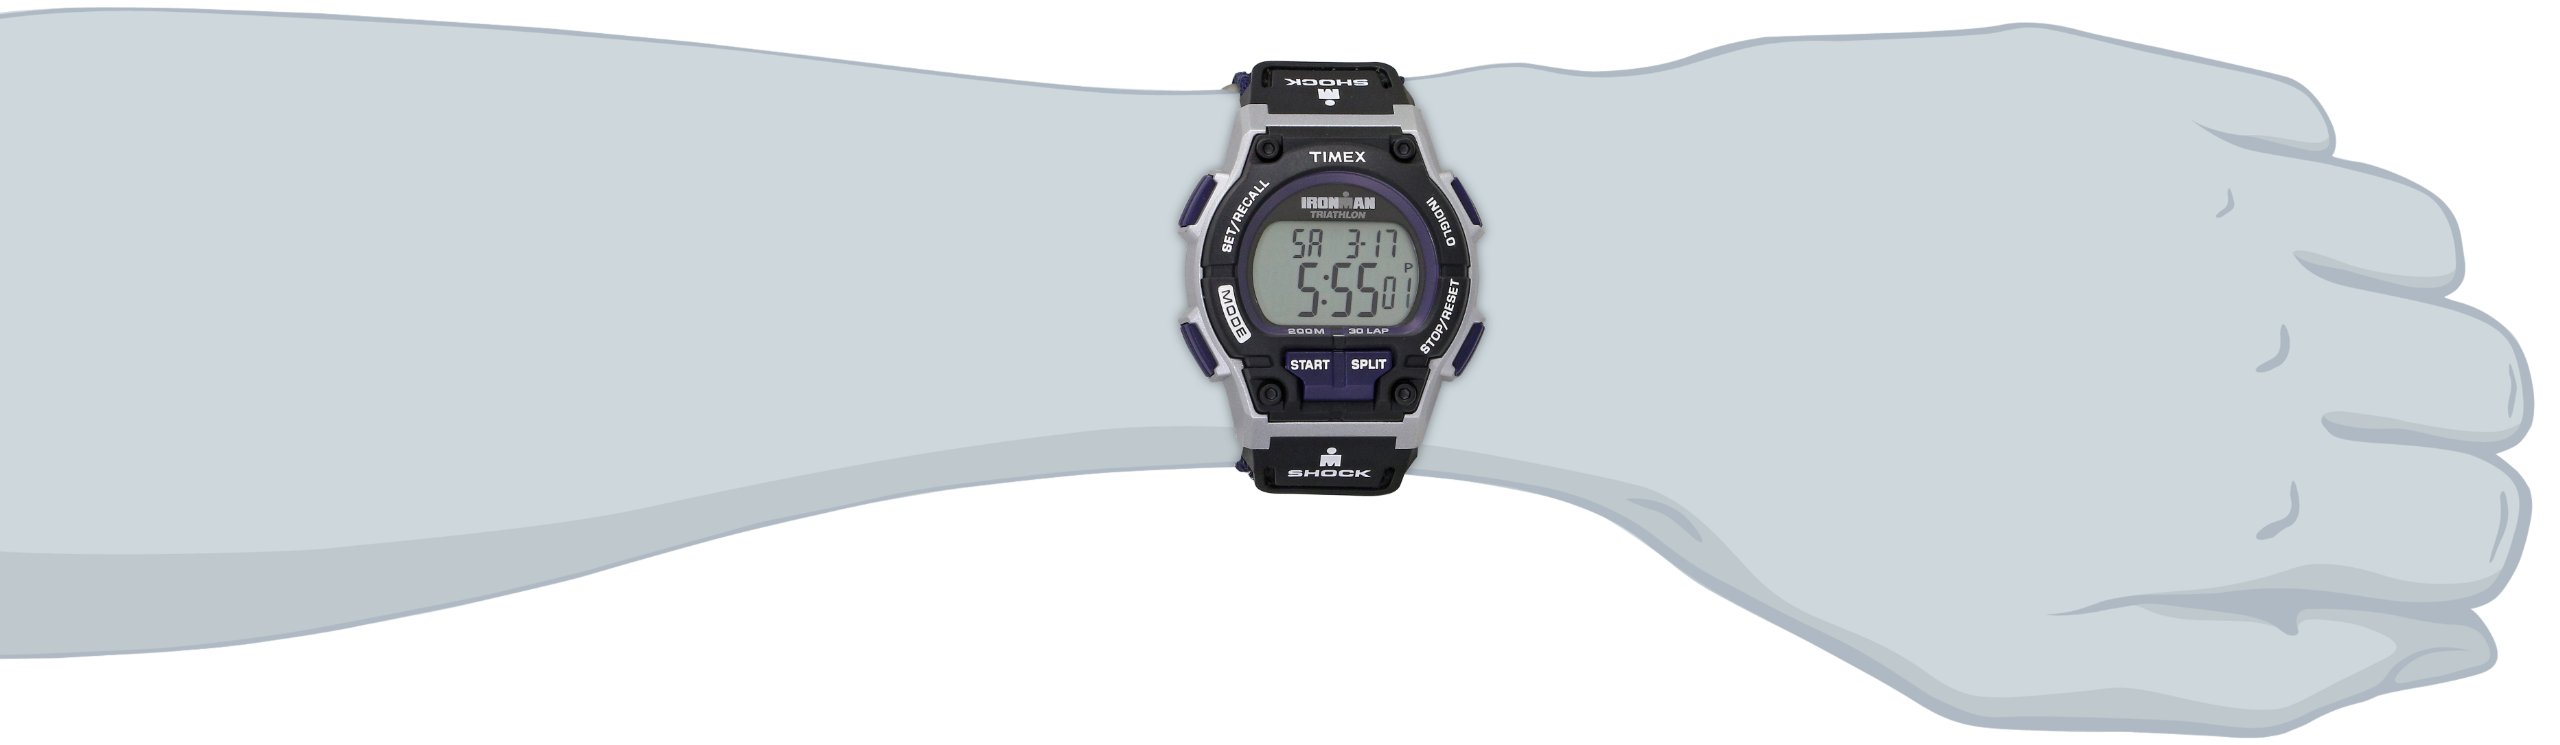 Timex Full-Size Ironman Endure 30 Shock Watch